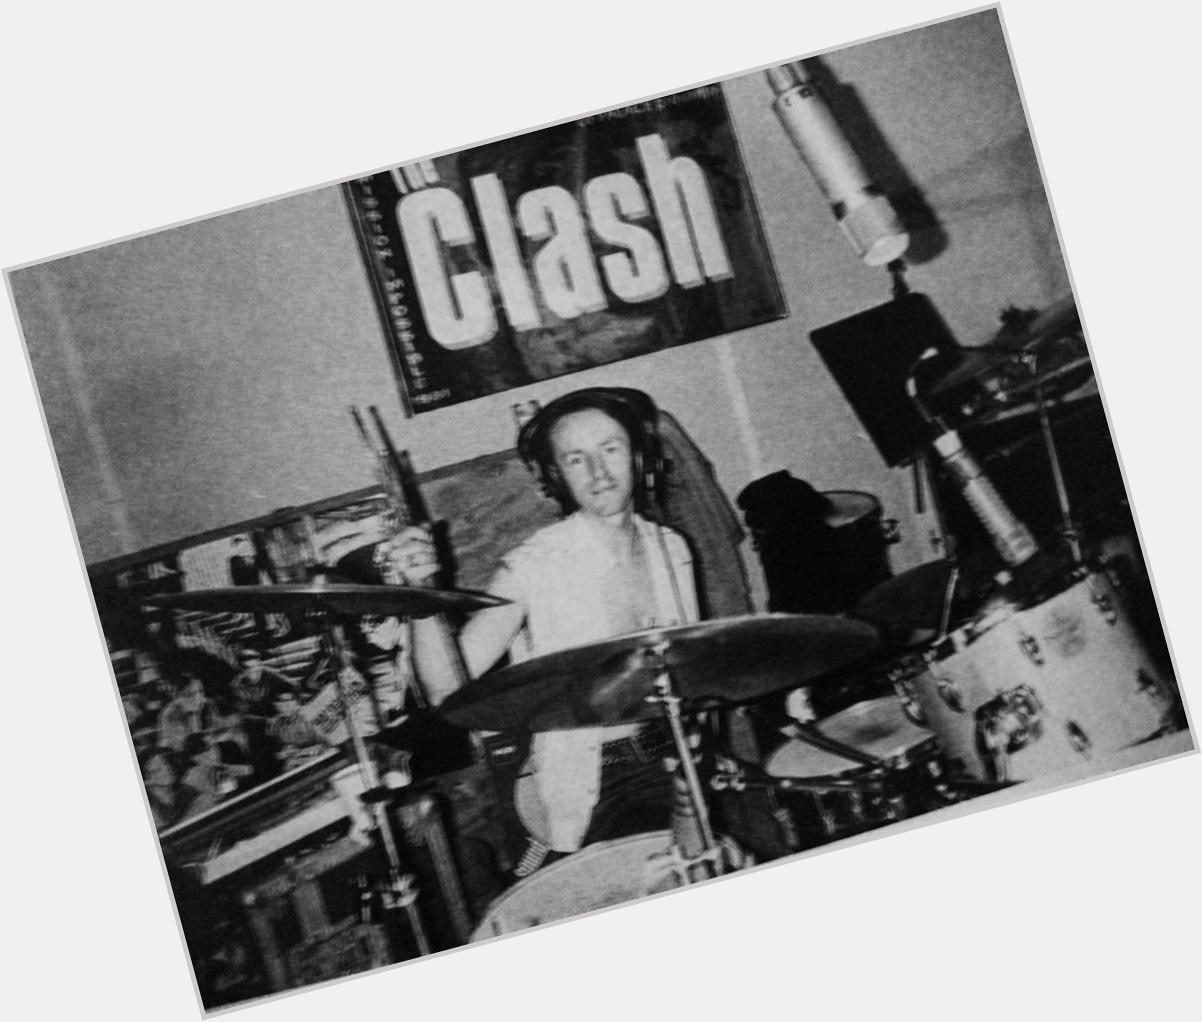 30 de mayo de 1955, Happy Birthday Nicky \Topper\ Headon.
( The Clash, The Moors Murderers) 